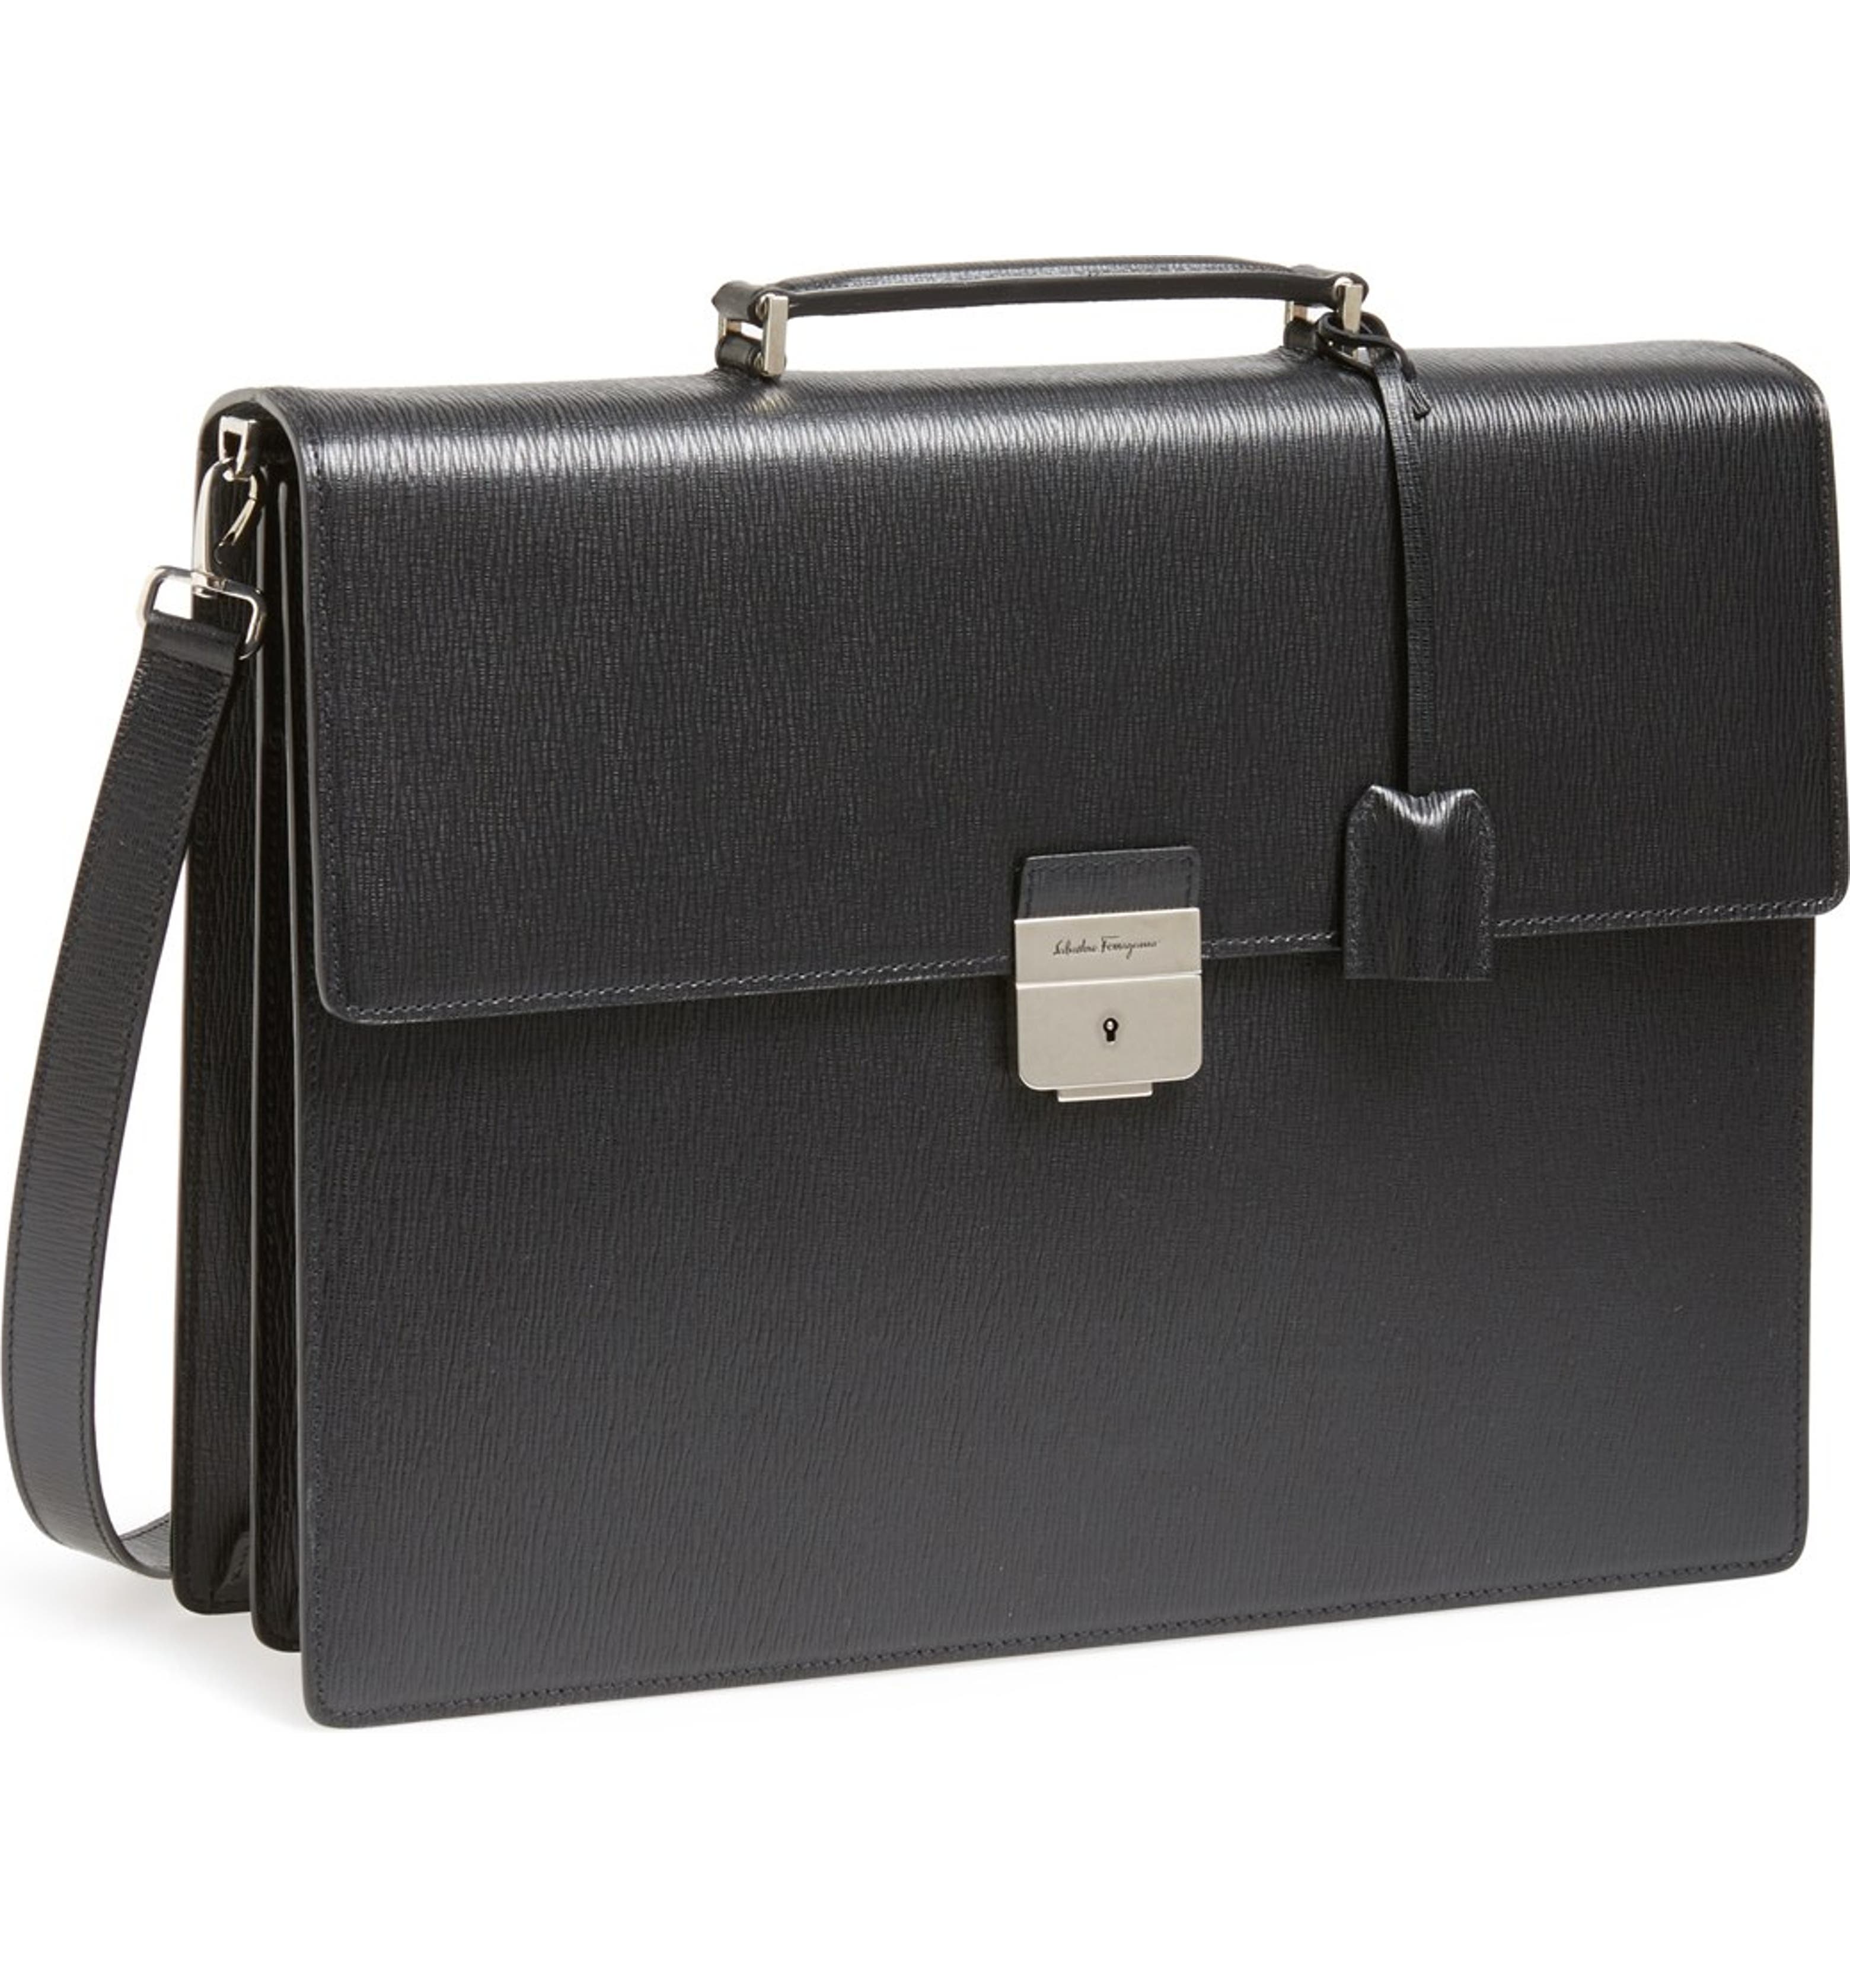 Salvatore Ferragamo 'Revival' Leather Briefcase | Nordstrom